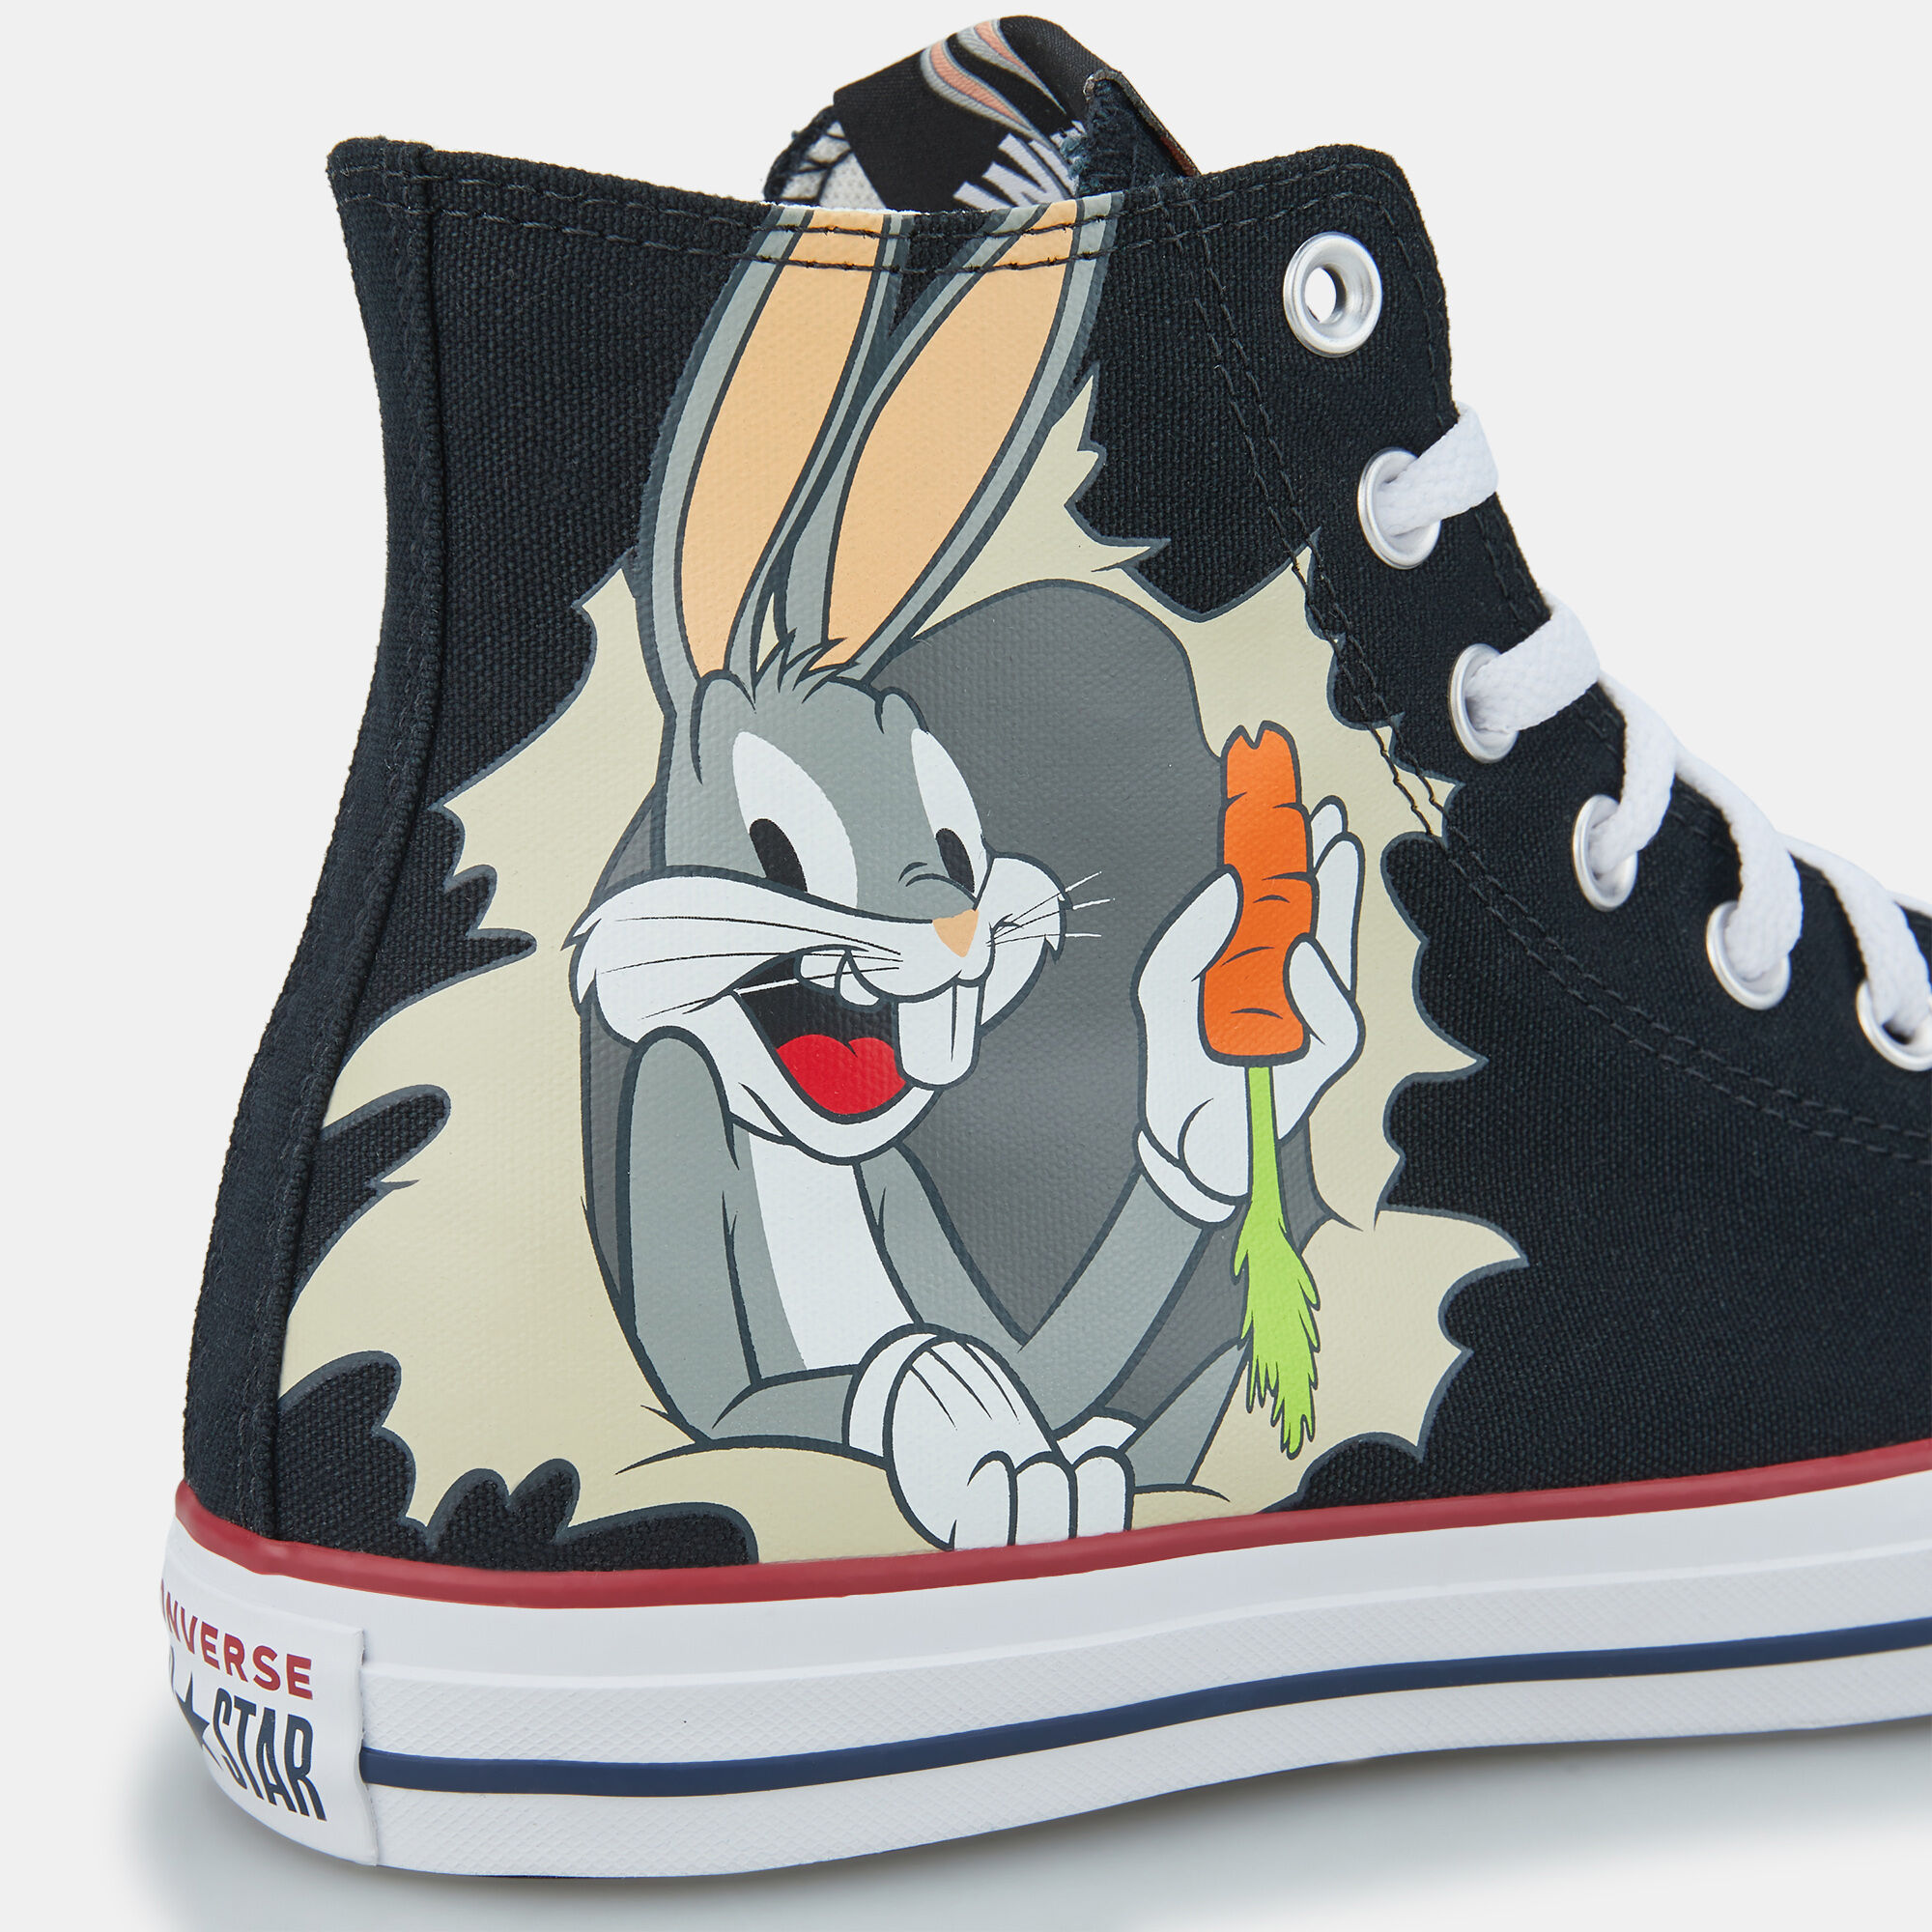 Buy Converse Bugs Bunny Chuck Taylor All Star Hi Shoe in